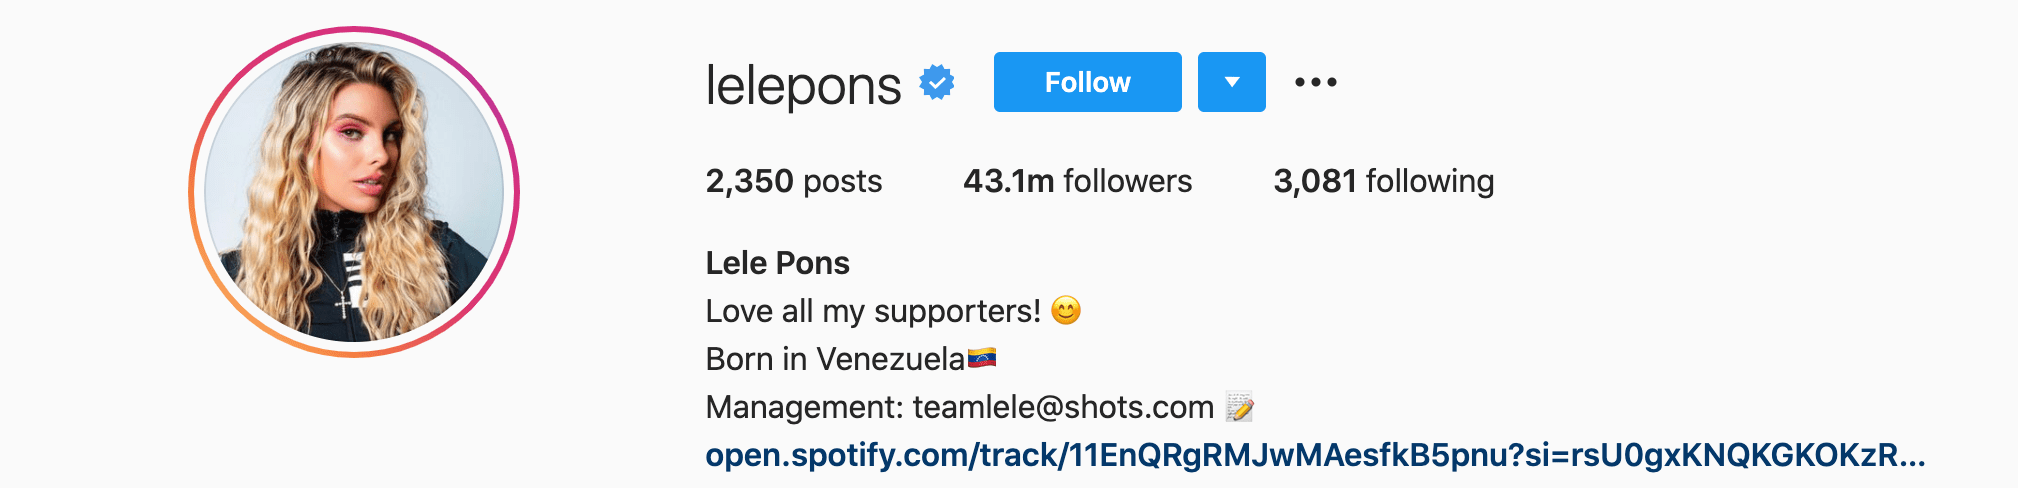 Top Instagram Influencers - LELE PONS